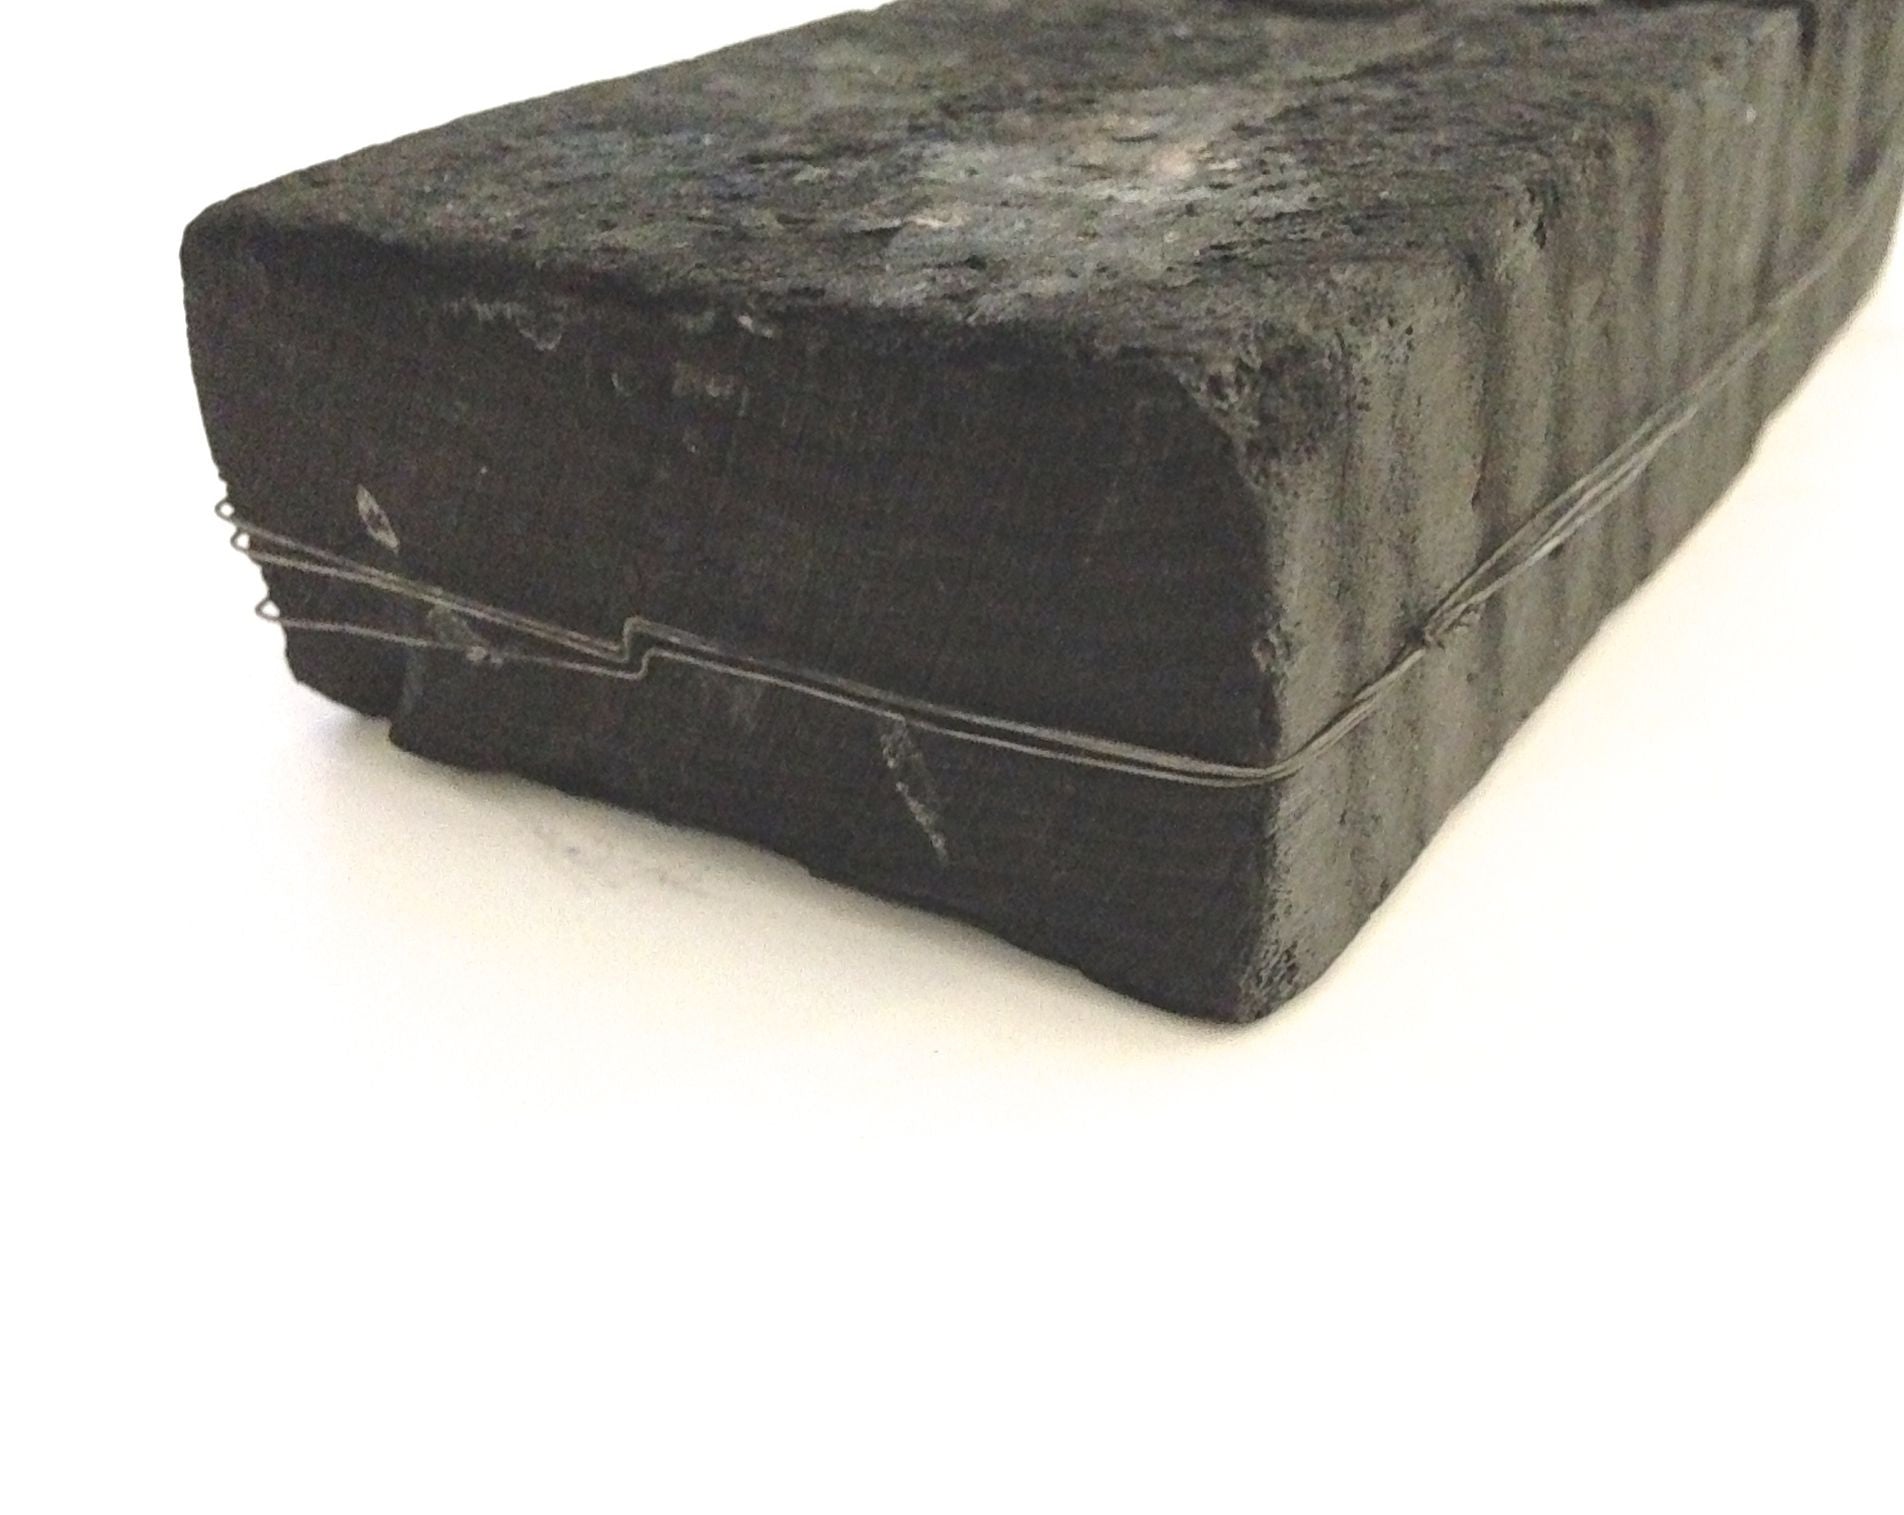 Hardwood Charcoal Soldering Blocks